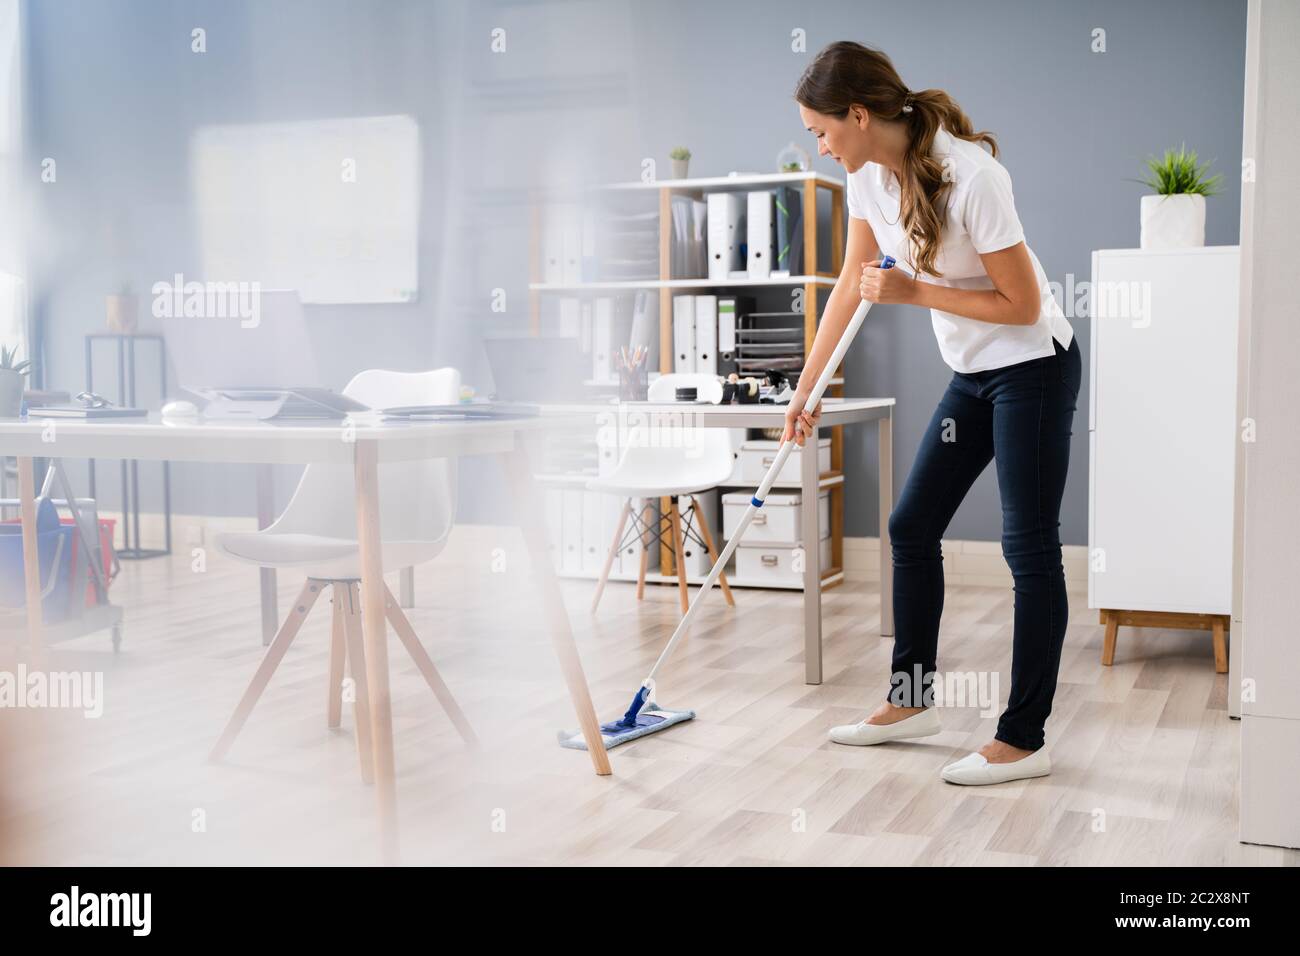 Full Length Of Female Janitor Mopping Floor In Office Stock Photo